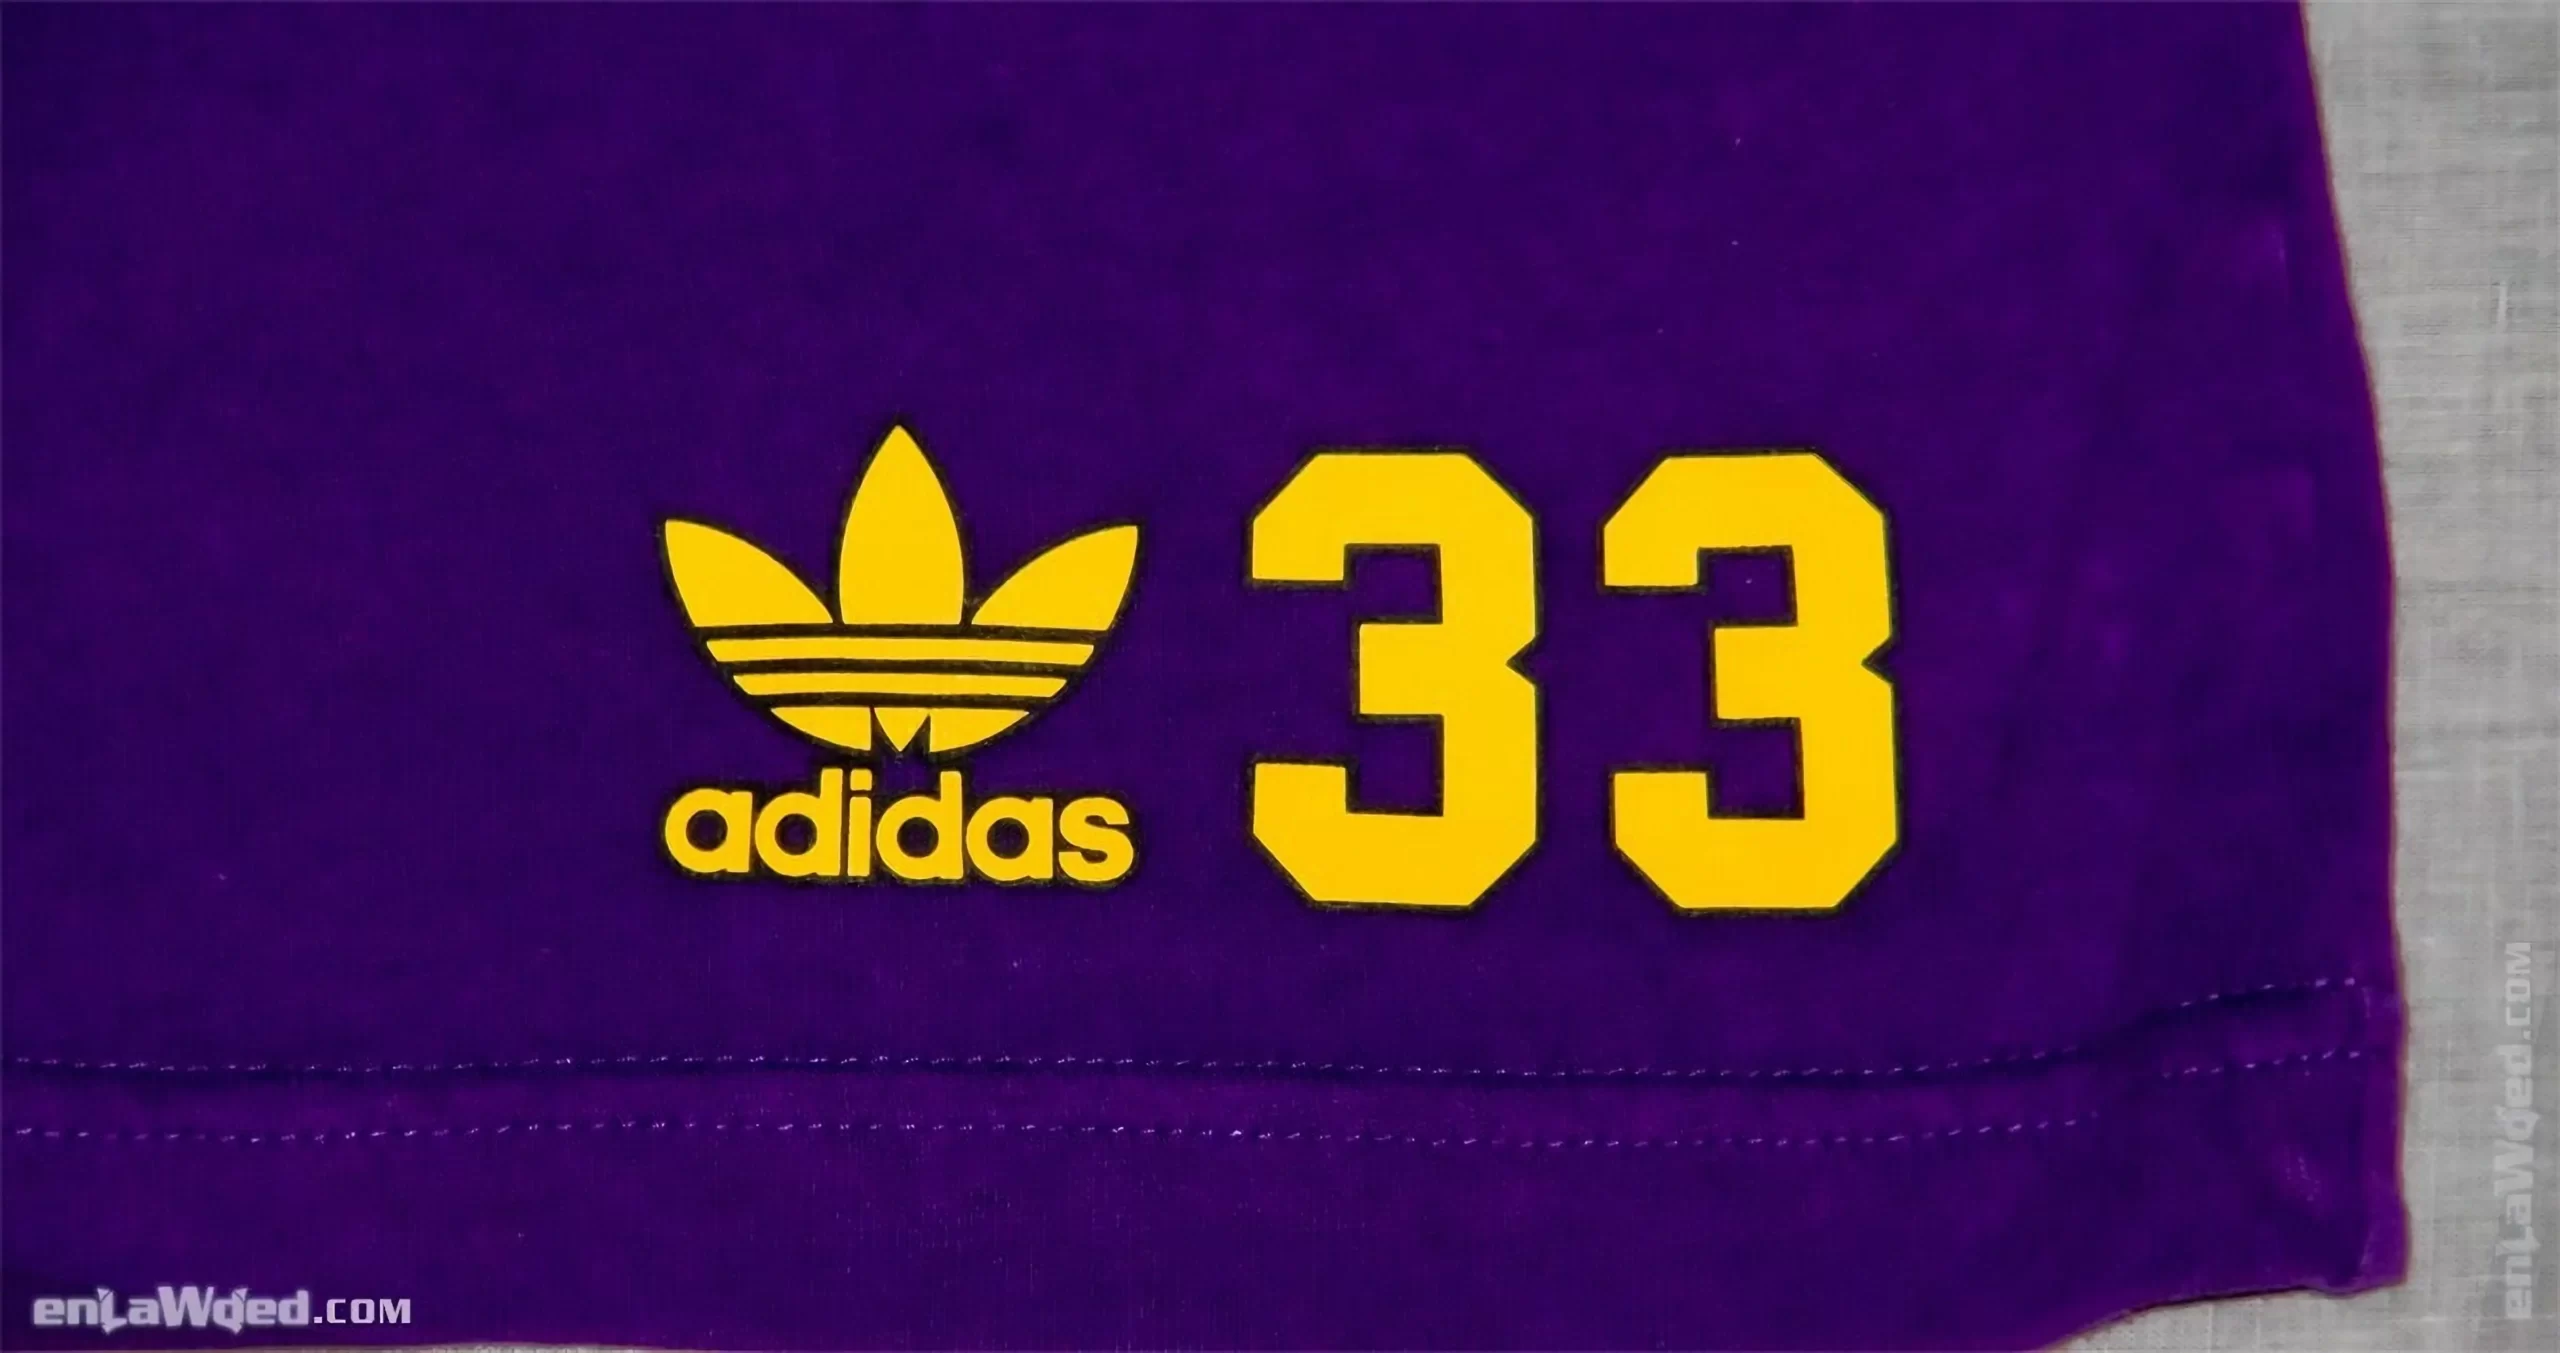 Men’s 2004 SkyHook Lakers #33 T-Shirt by Adidas: Unburdened (EnLawded.com file #lmchk90351ip2y124411kg9st)